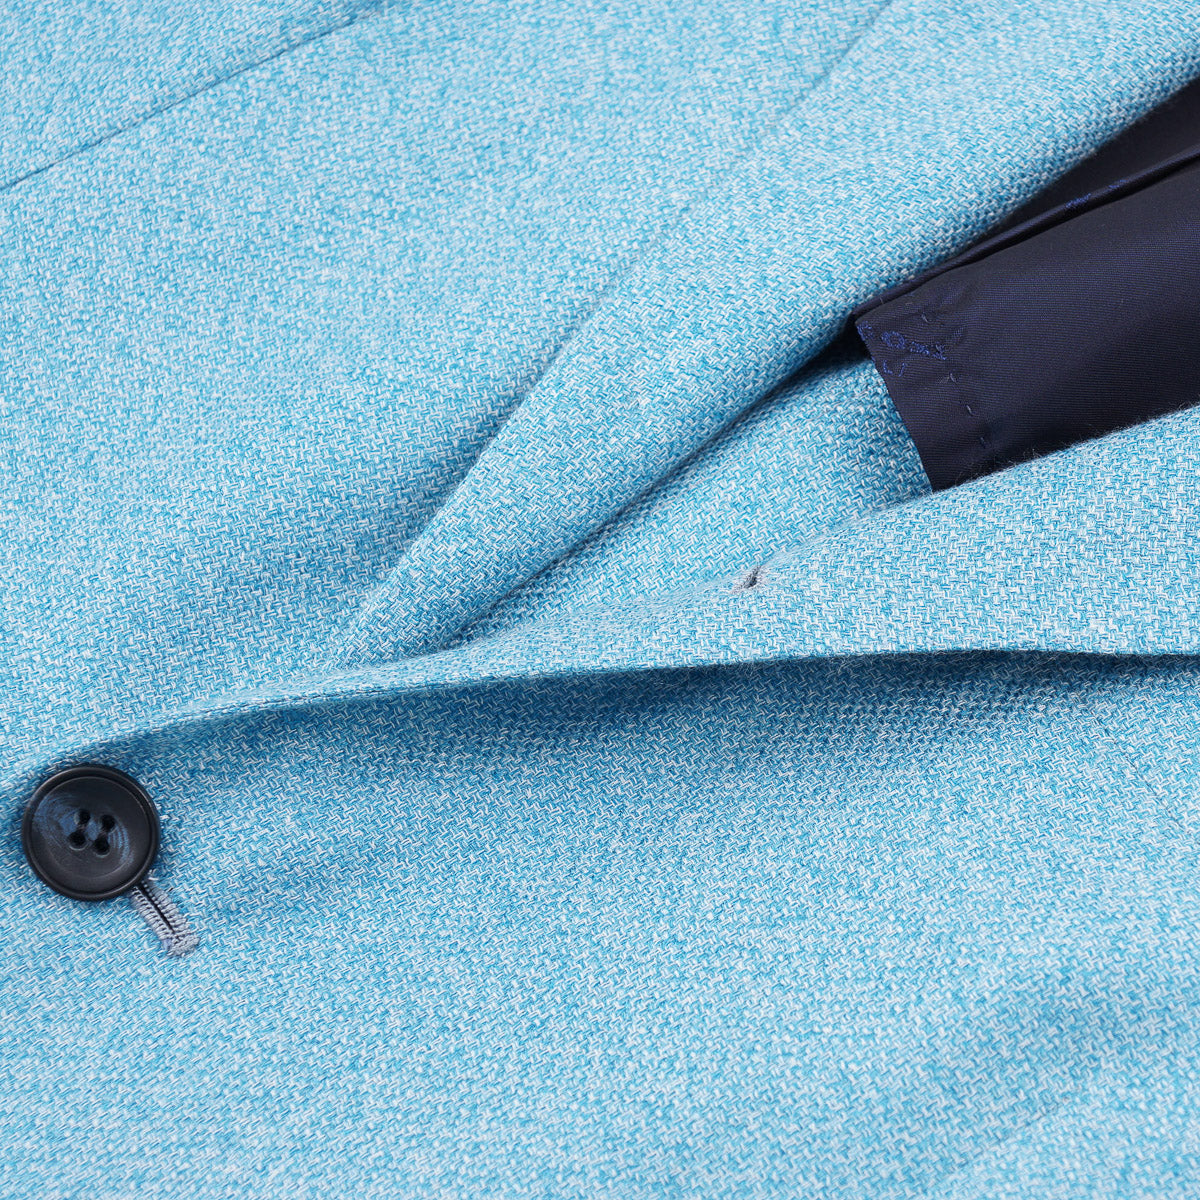 Kiton Woven Cashmere-Blend Sport Coat - Top Shelf Apparel